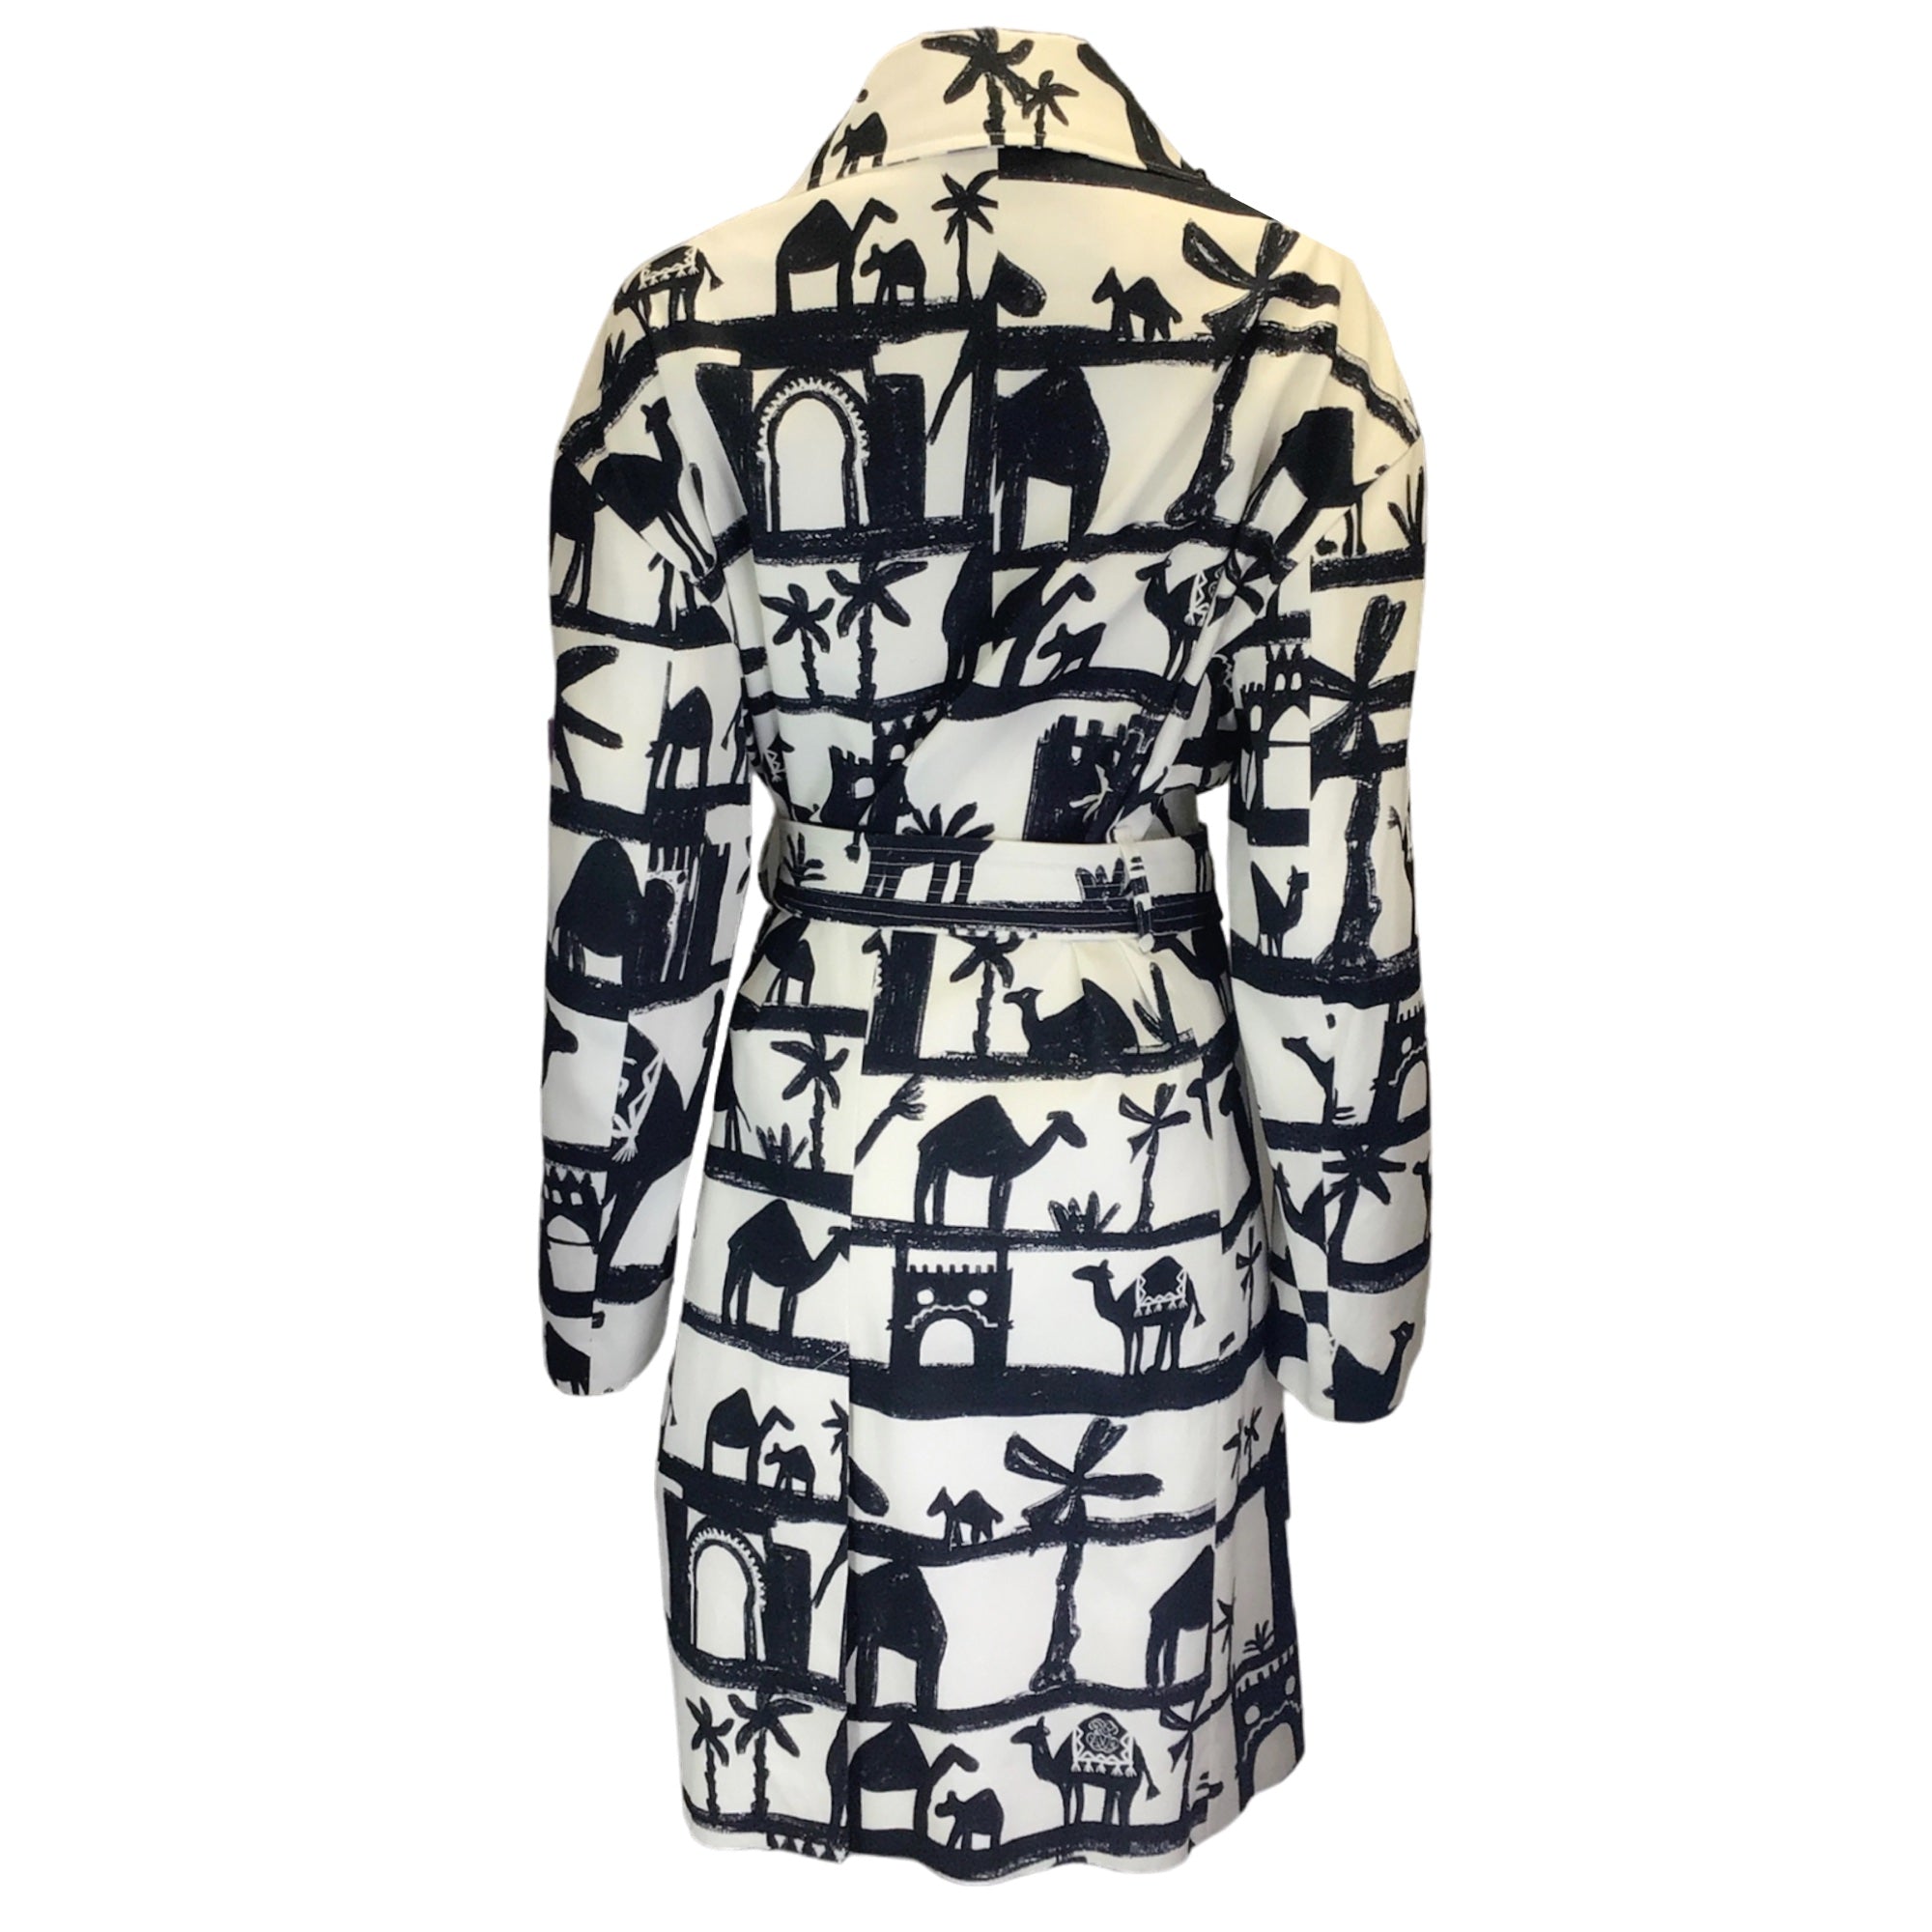 Prune Goldschmidt Ivory / Black Camel Print Cotton Trench Coat